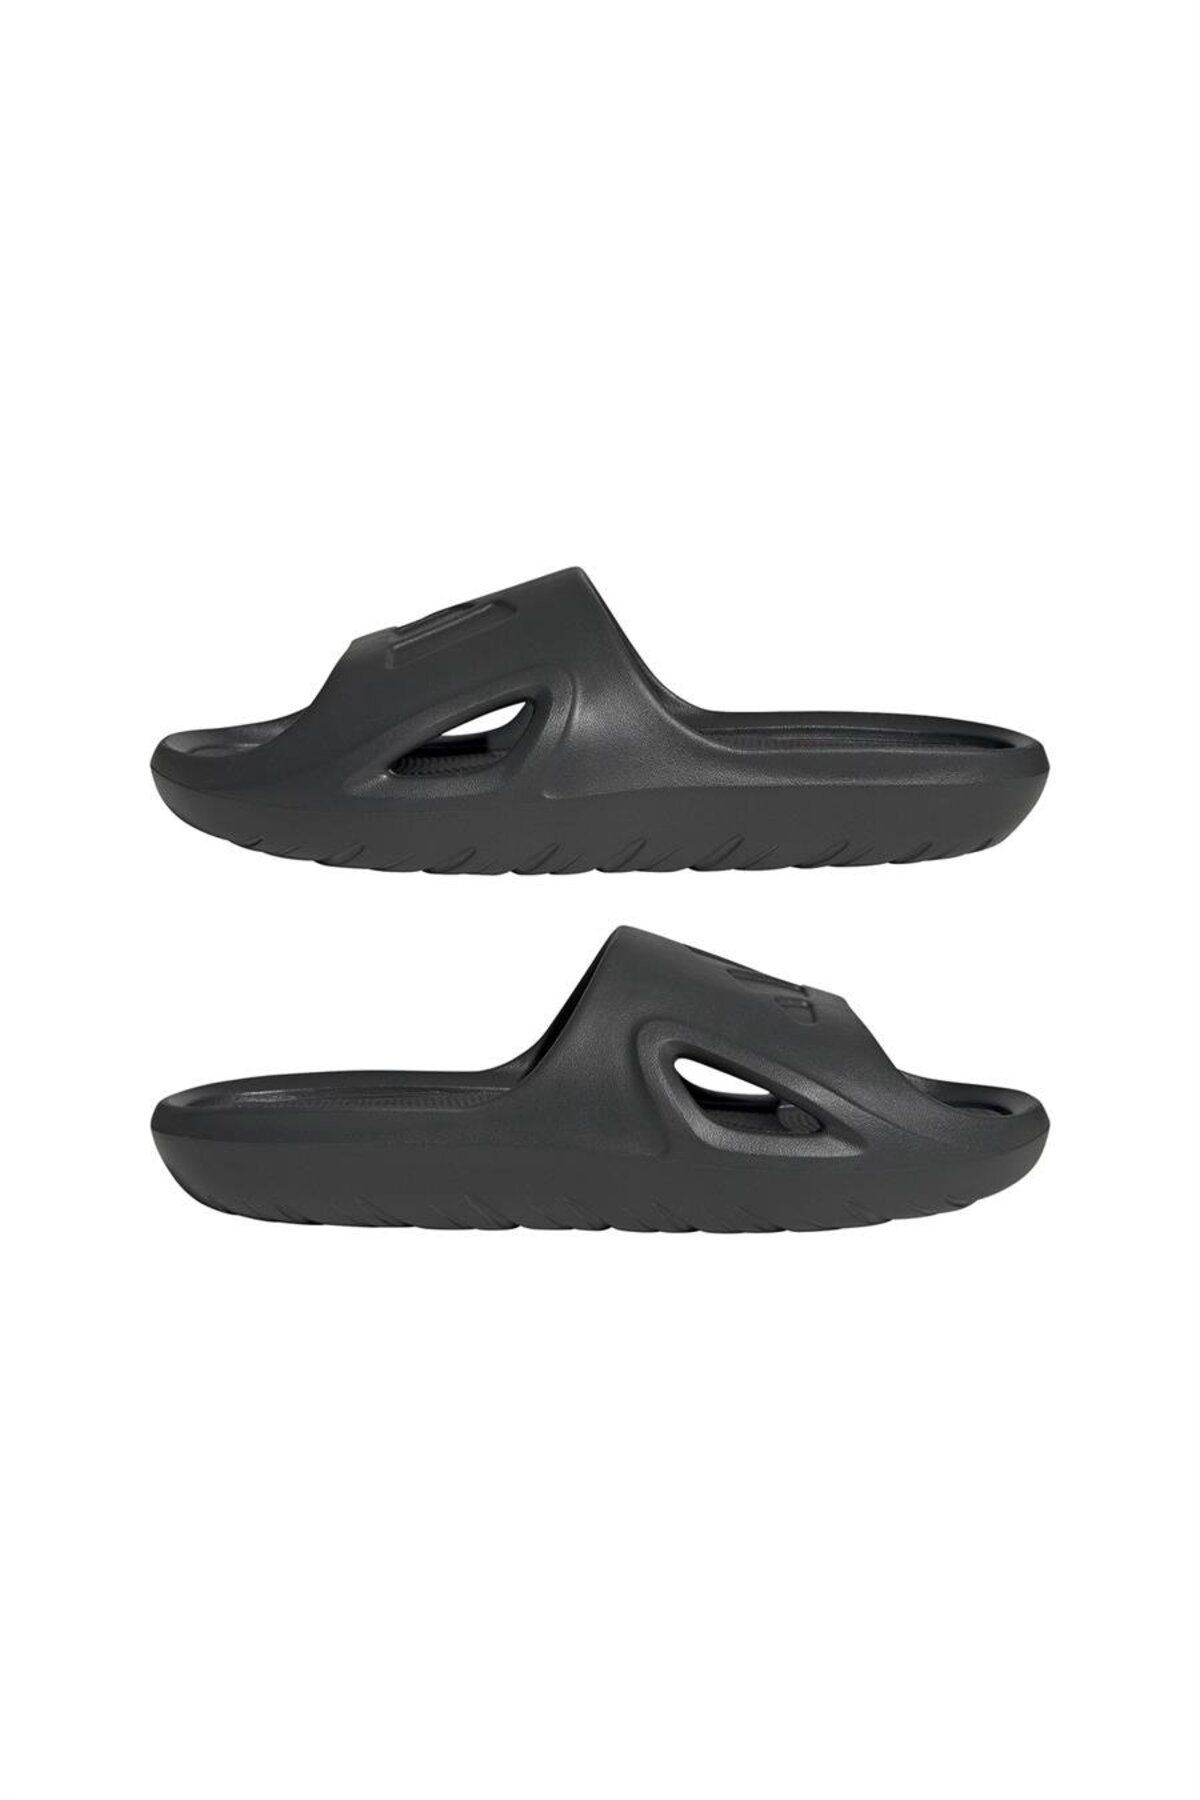 adidas Adicane Slides Carbon Core Black Hq9915